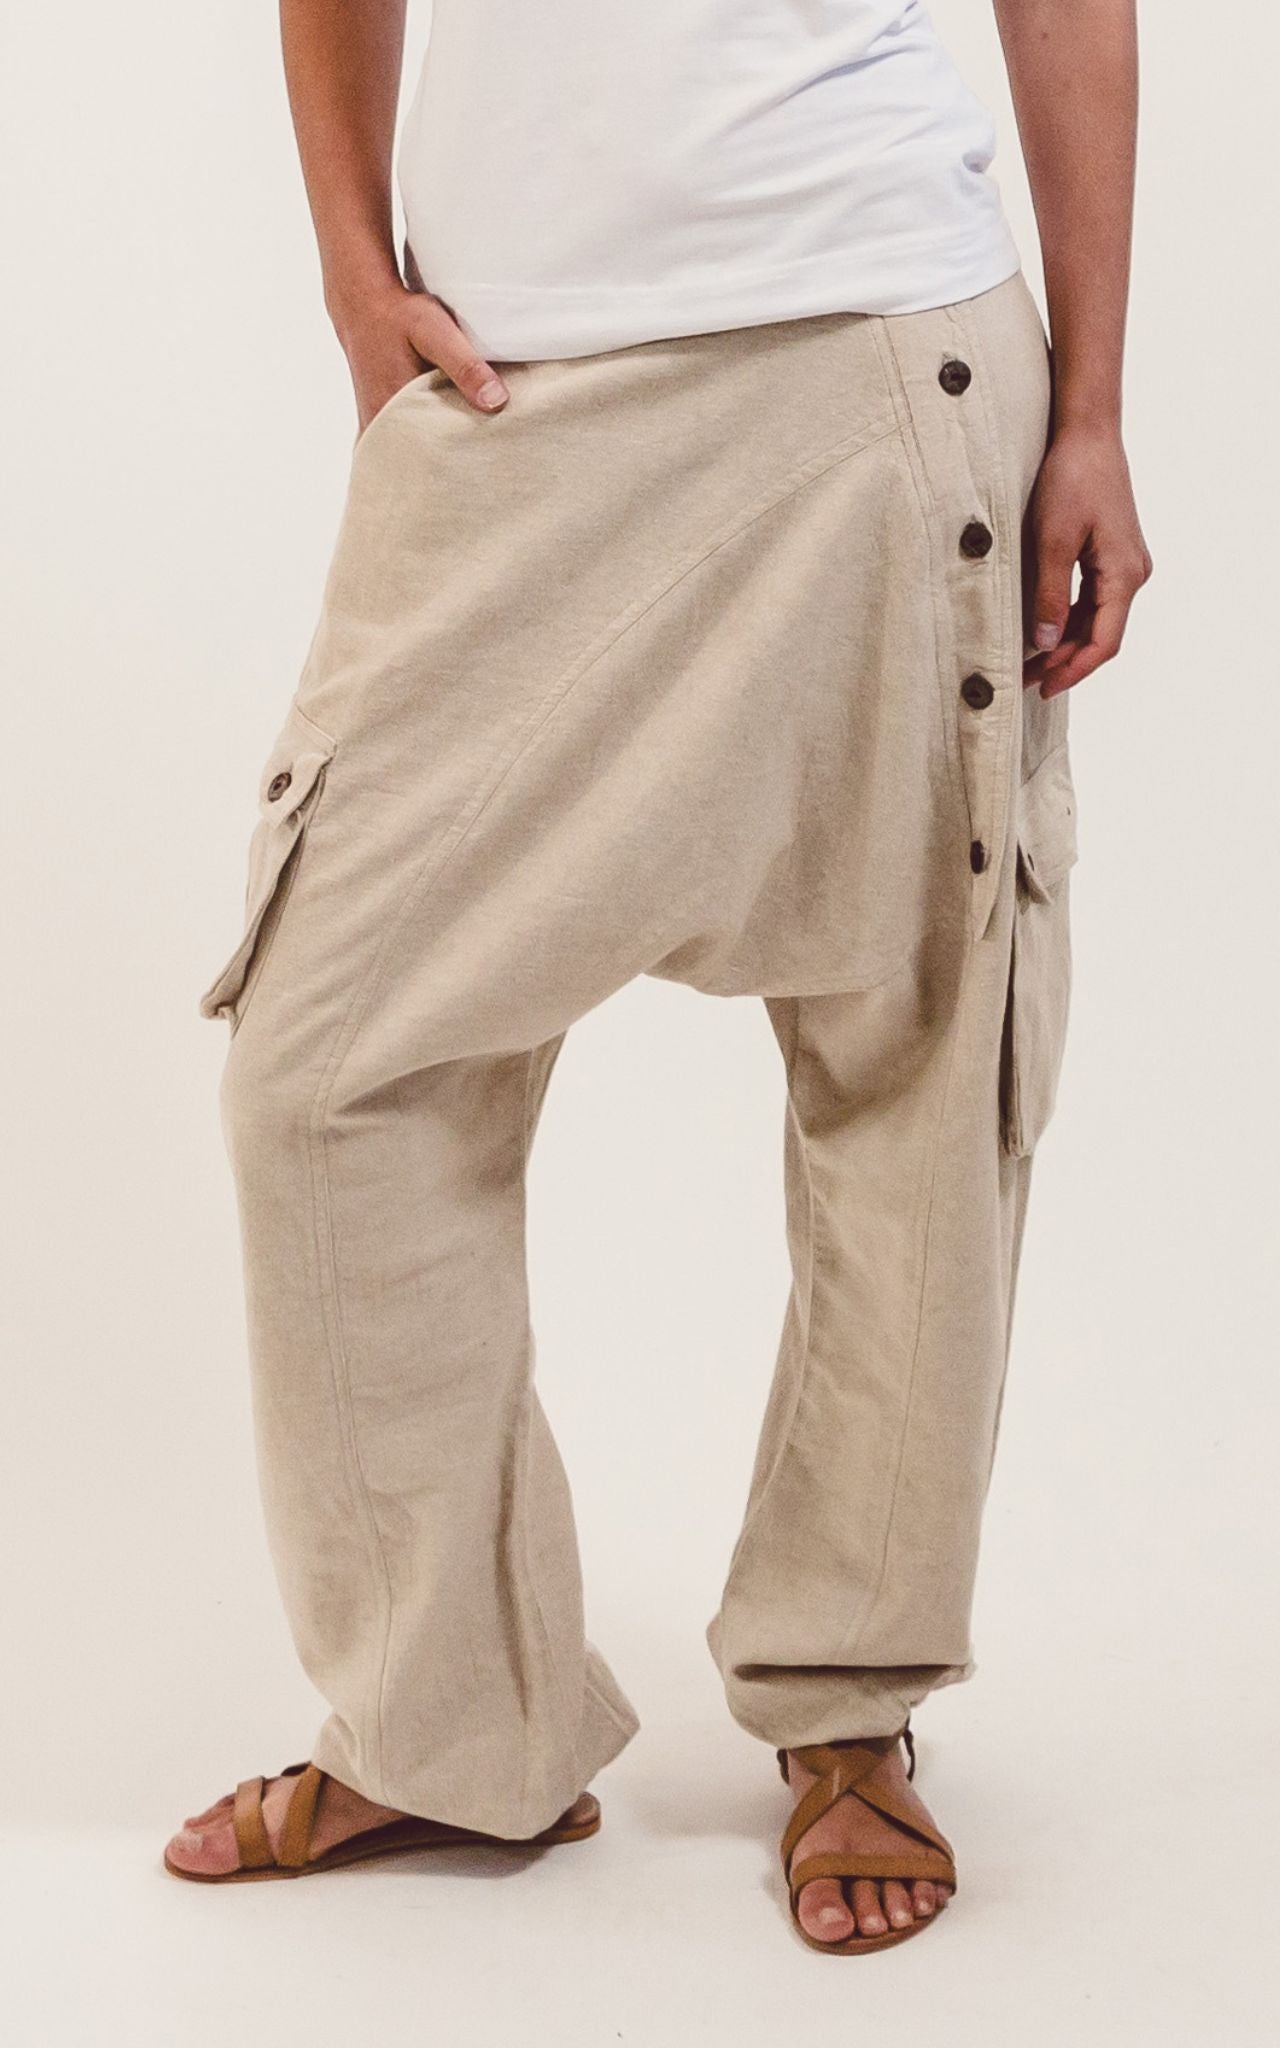 Surya Australia Ethical Drop Crotch Pants Made in Nepal - Oatmeal